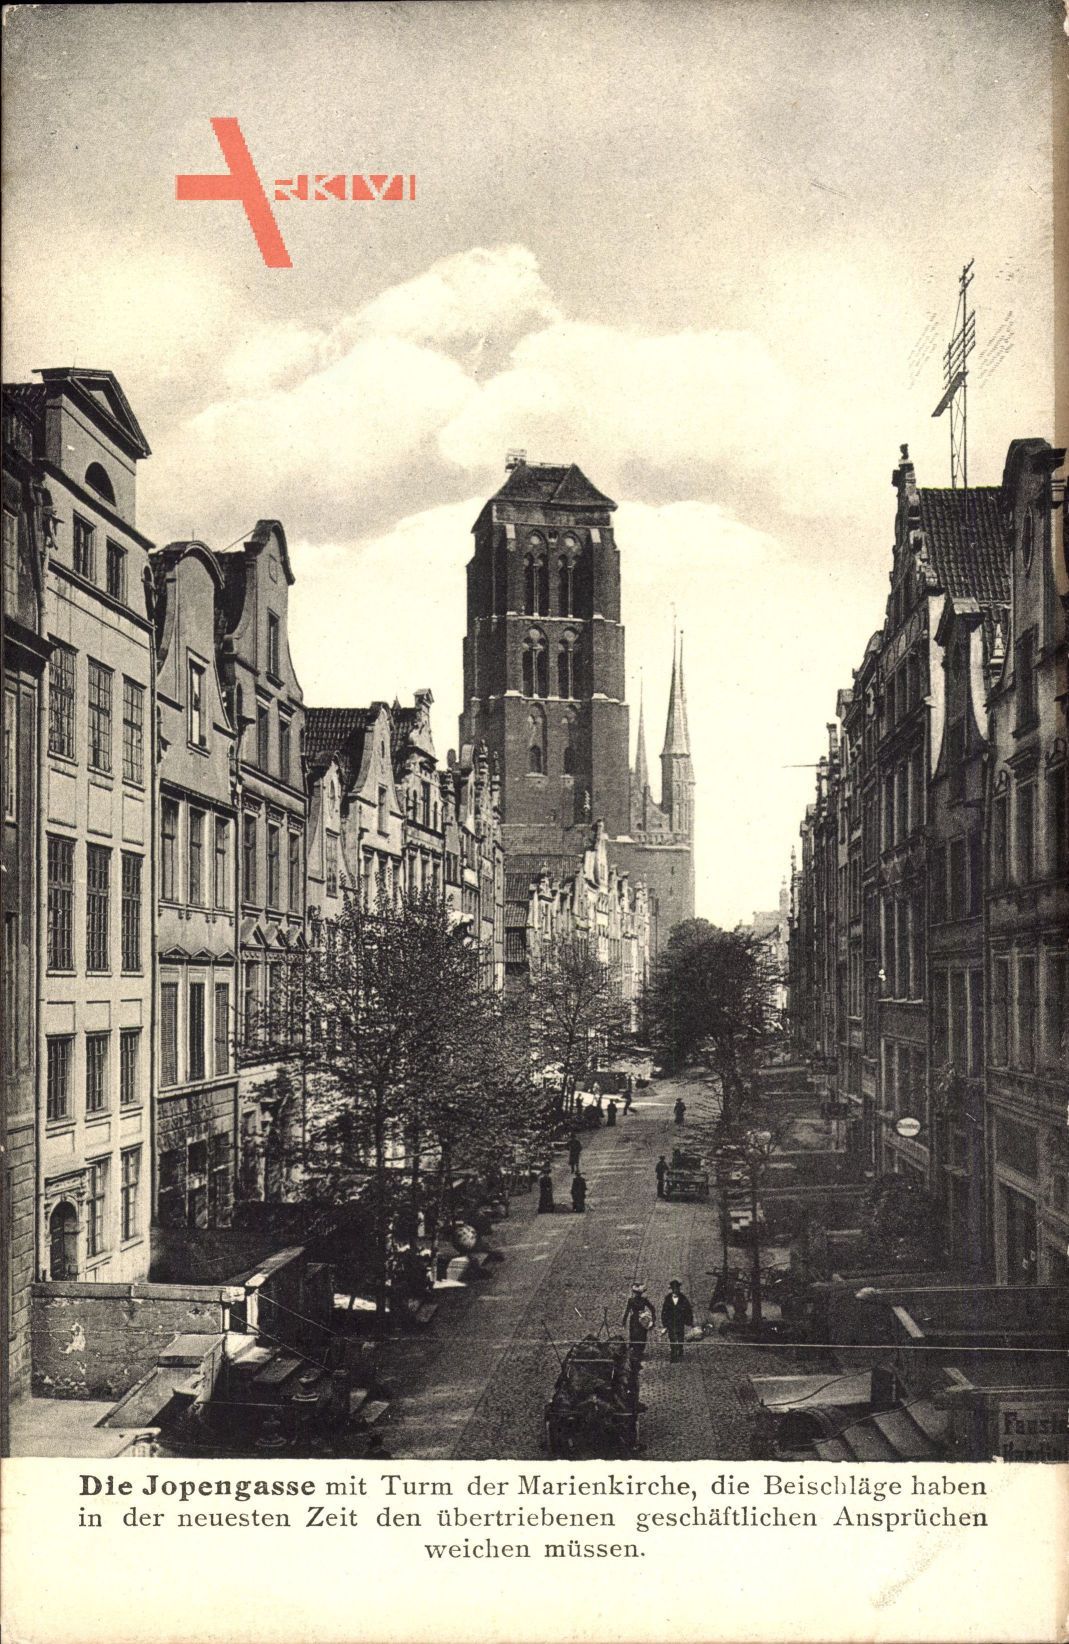 Gdańsk Danzig, Blick in die Jopengasse, Turm der Marienkirche